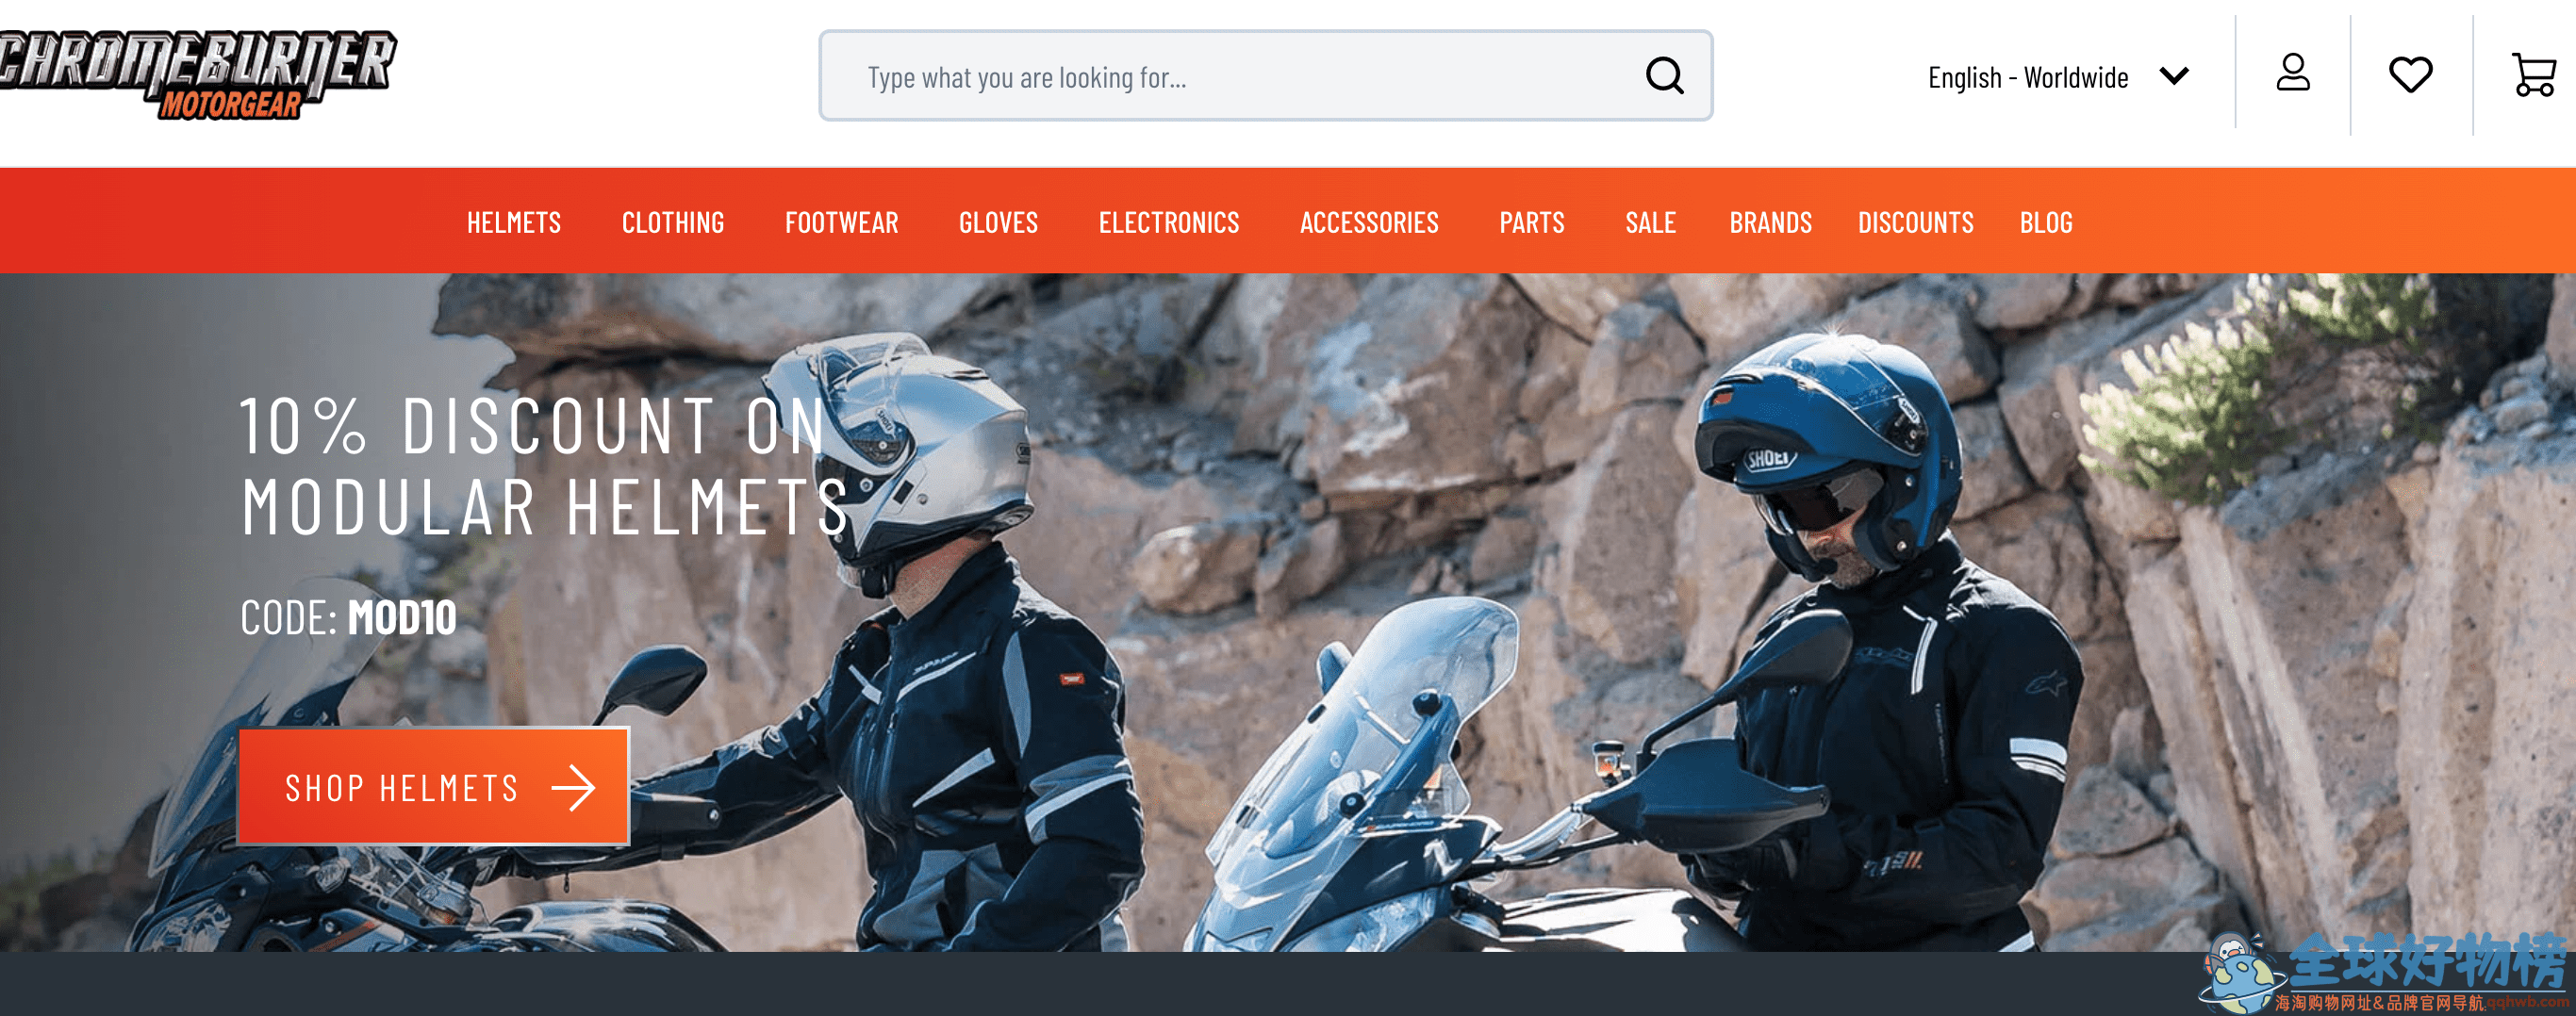 chromeburner官网,海淘摩托车装备配件网站